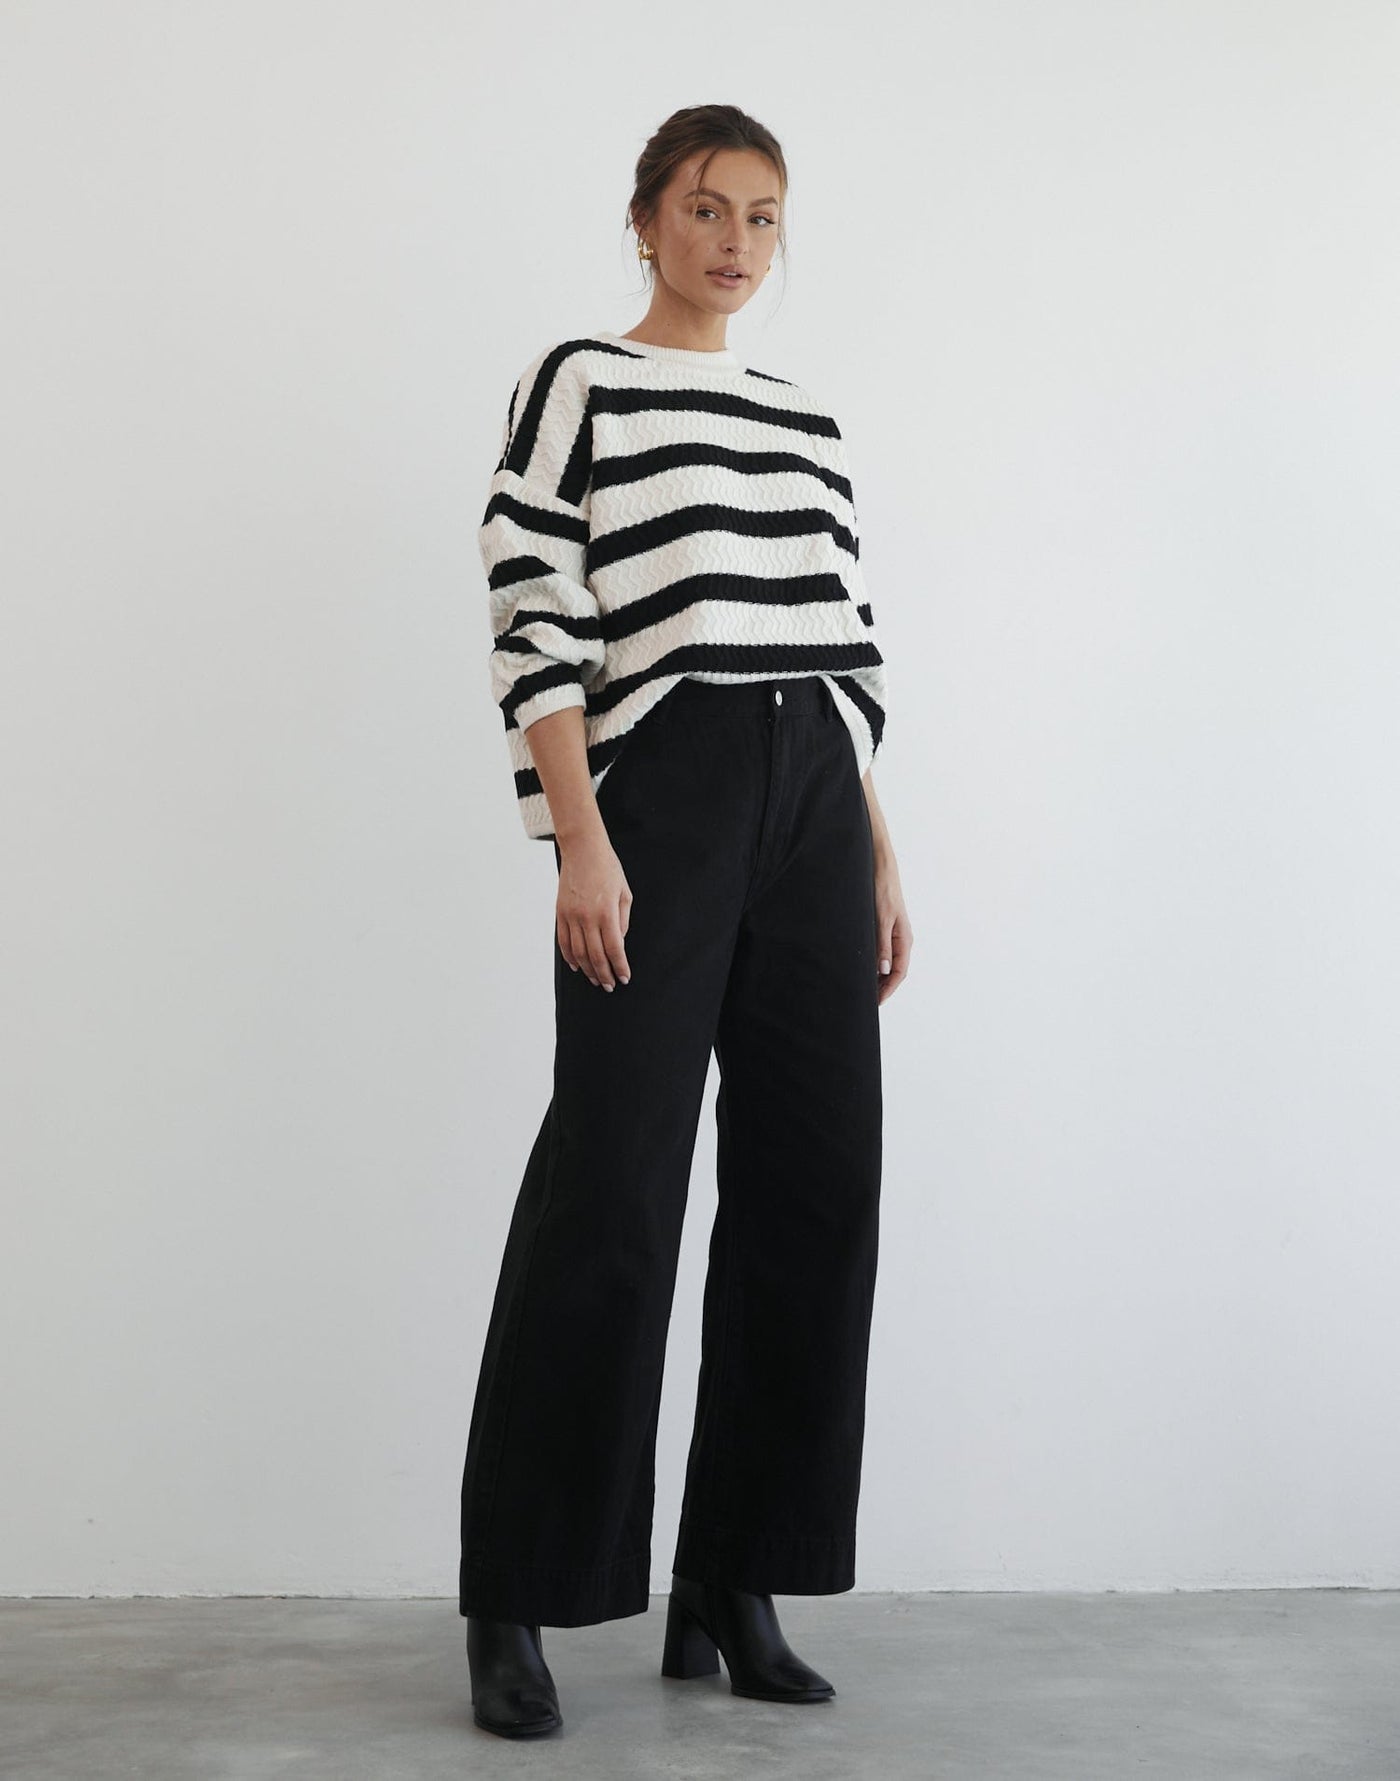 Maryanne Knit Jumper (Cream/Black) - Stripe Knit Jumper - Women's Top - Charcoal Clothing